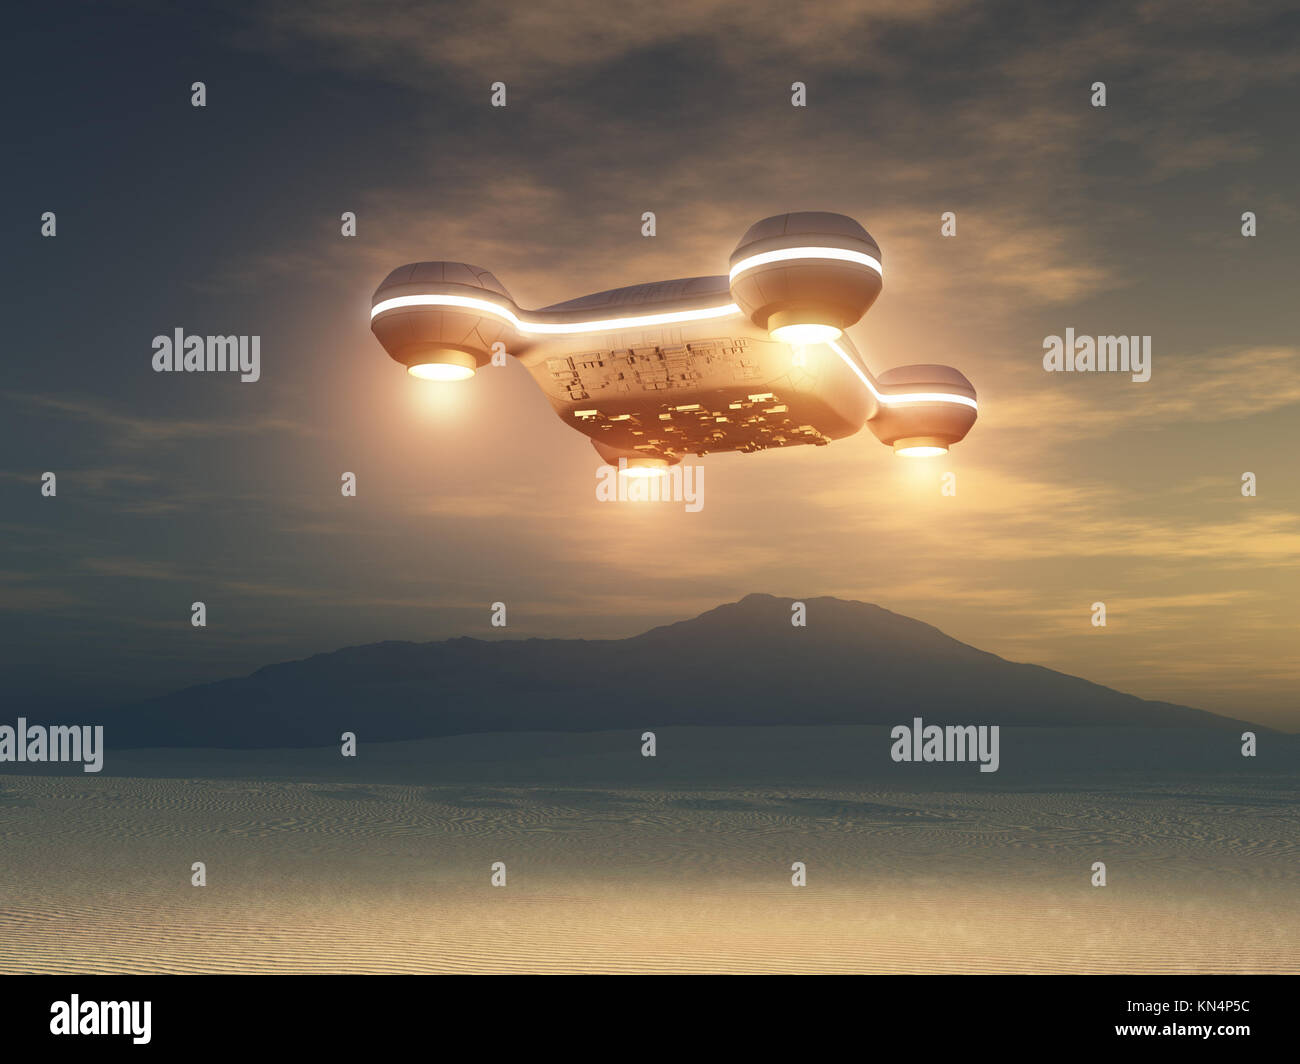 Spacecraft over a desert area Stock Photo